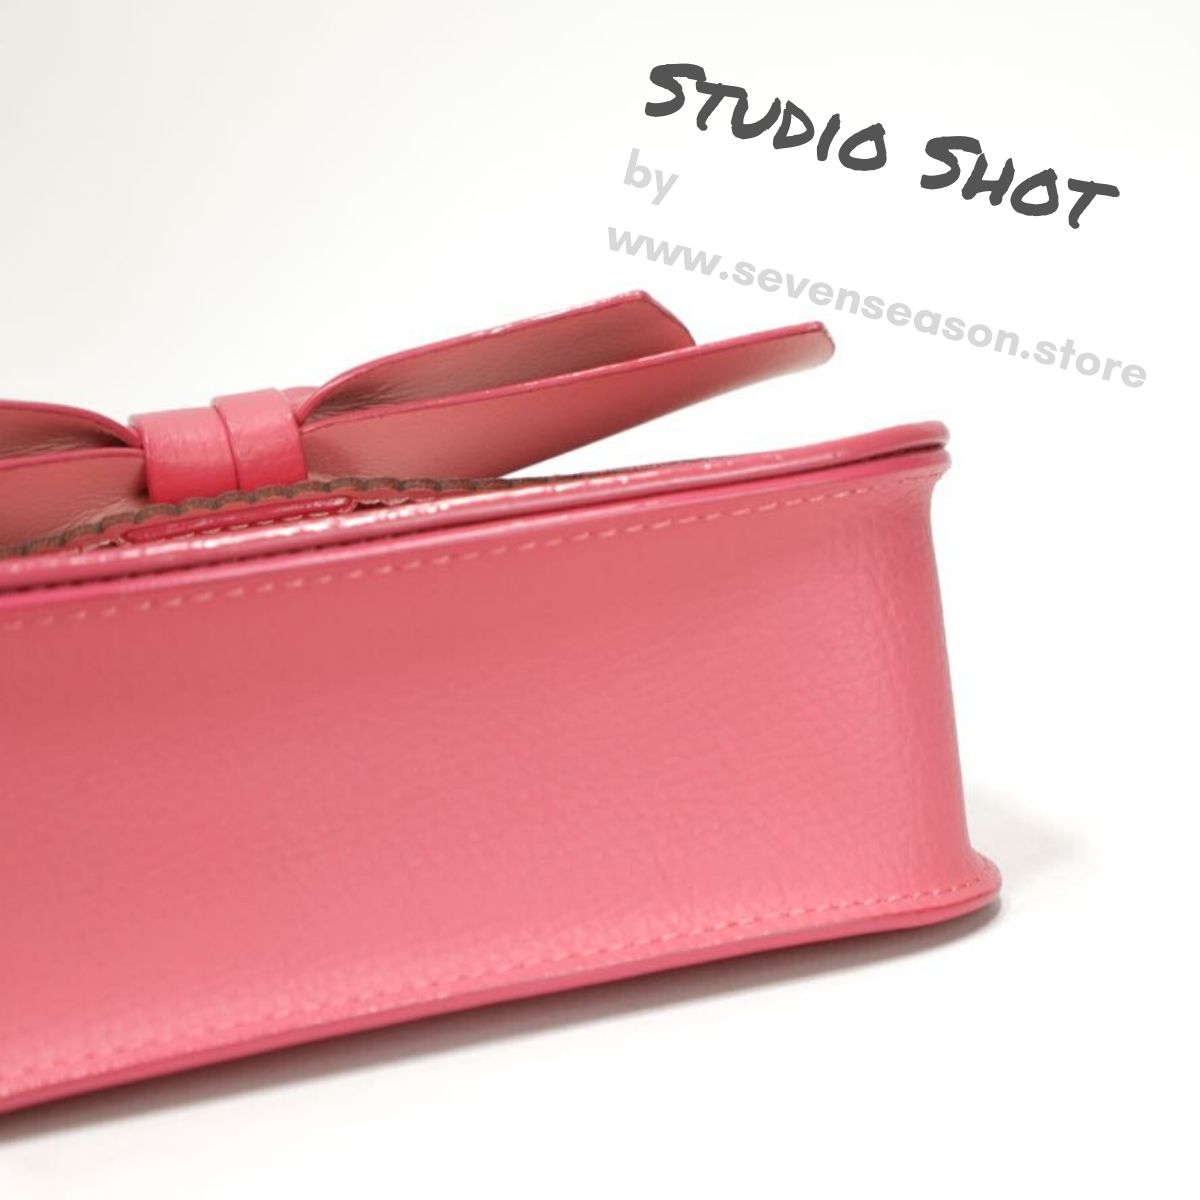 NWT Kate Spade New York Kerri Crossbody Leather Bag Purse Pink Bright Blush